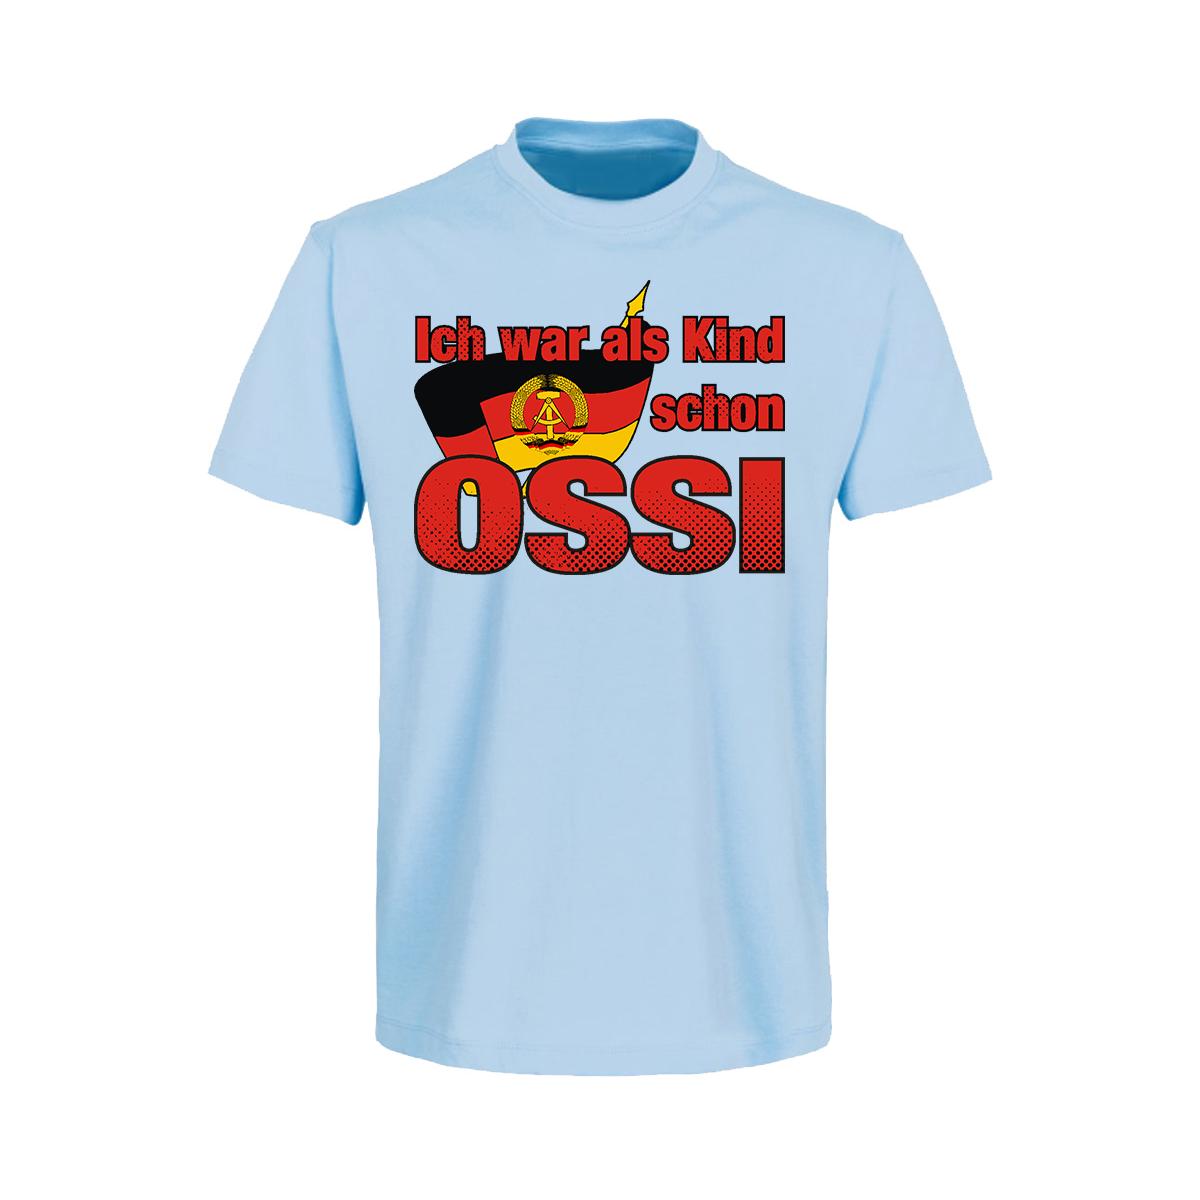 Ich war als Kind schon Ossi - Männer T-Shirt - hellblau